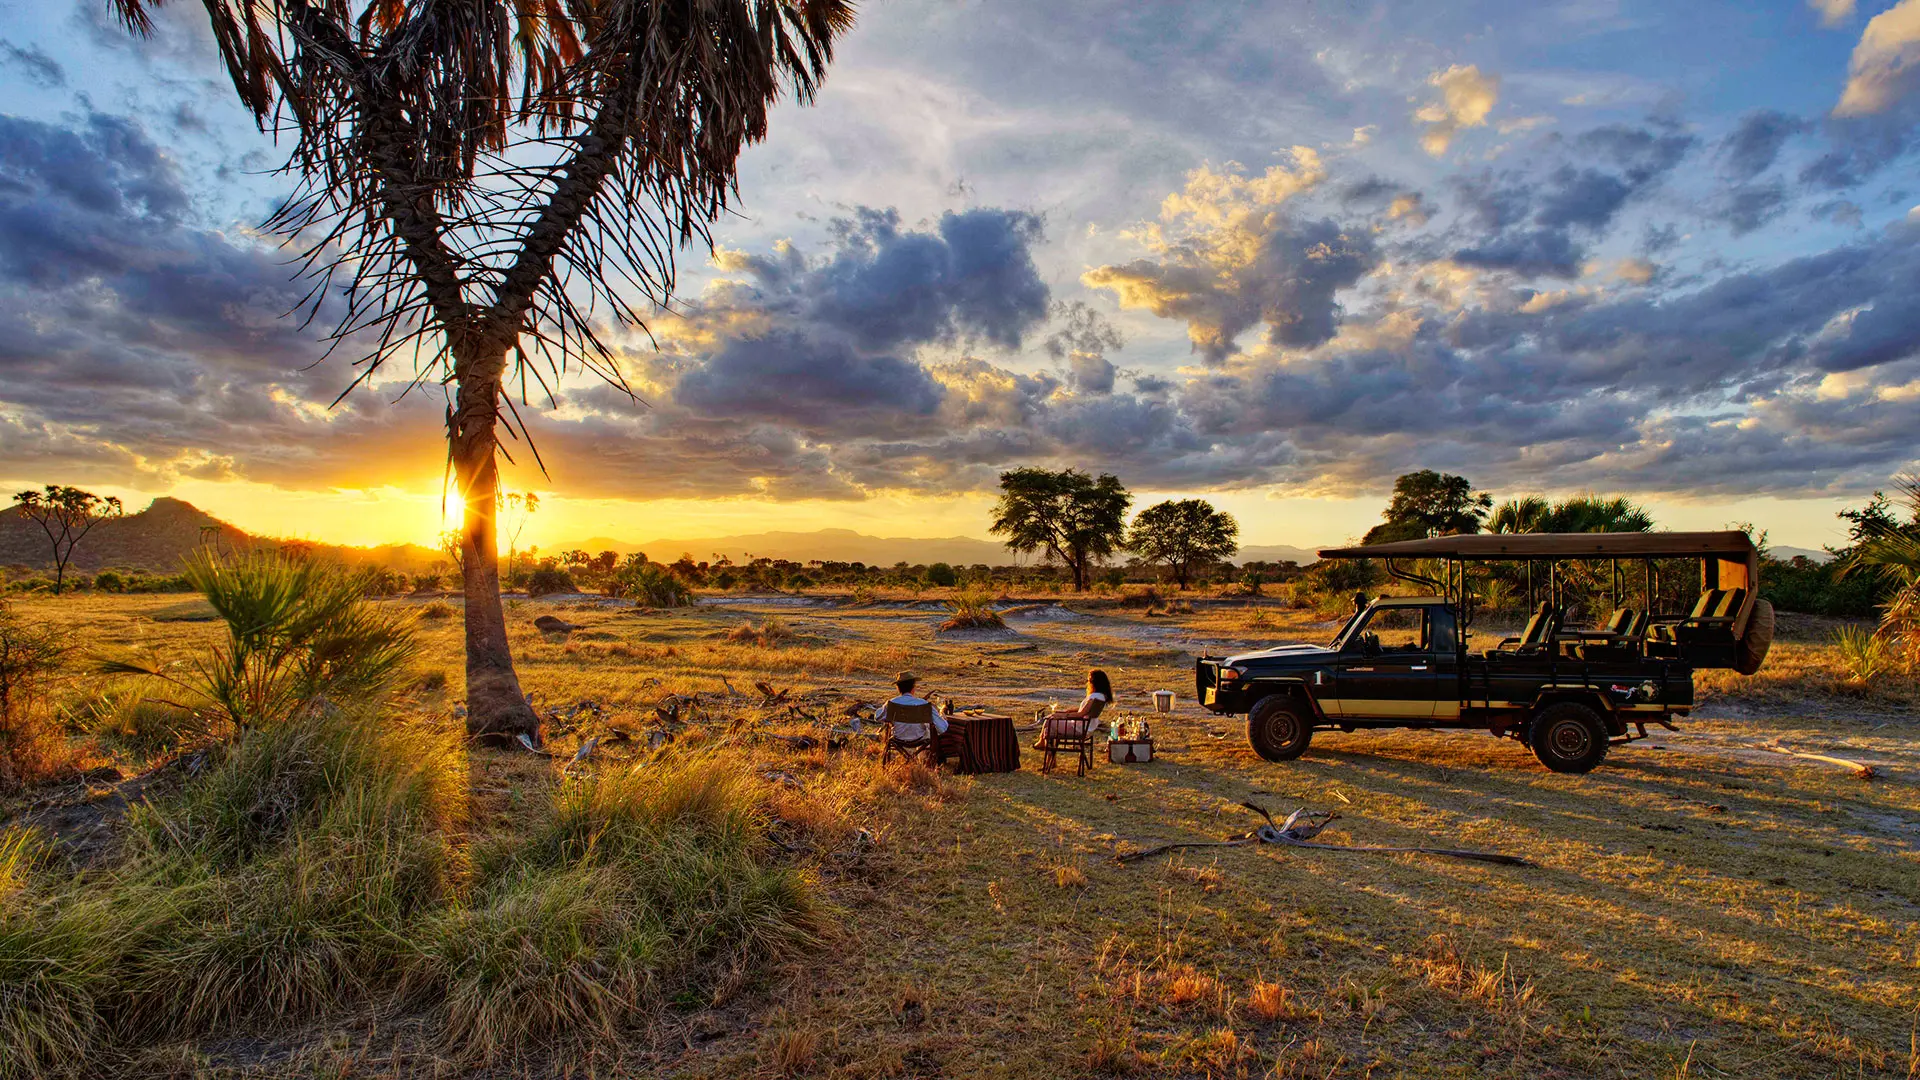 Relaxing Kenya holiday safaris at Meru National Park - Bush dining by Elsa’s Kopje